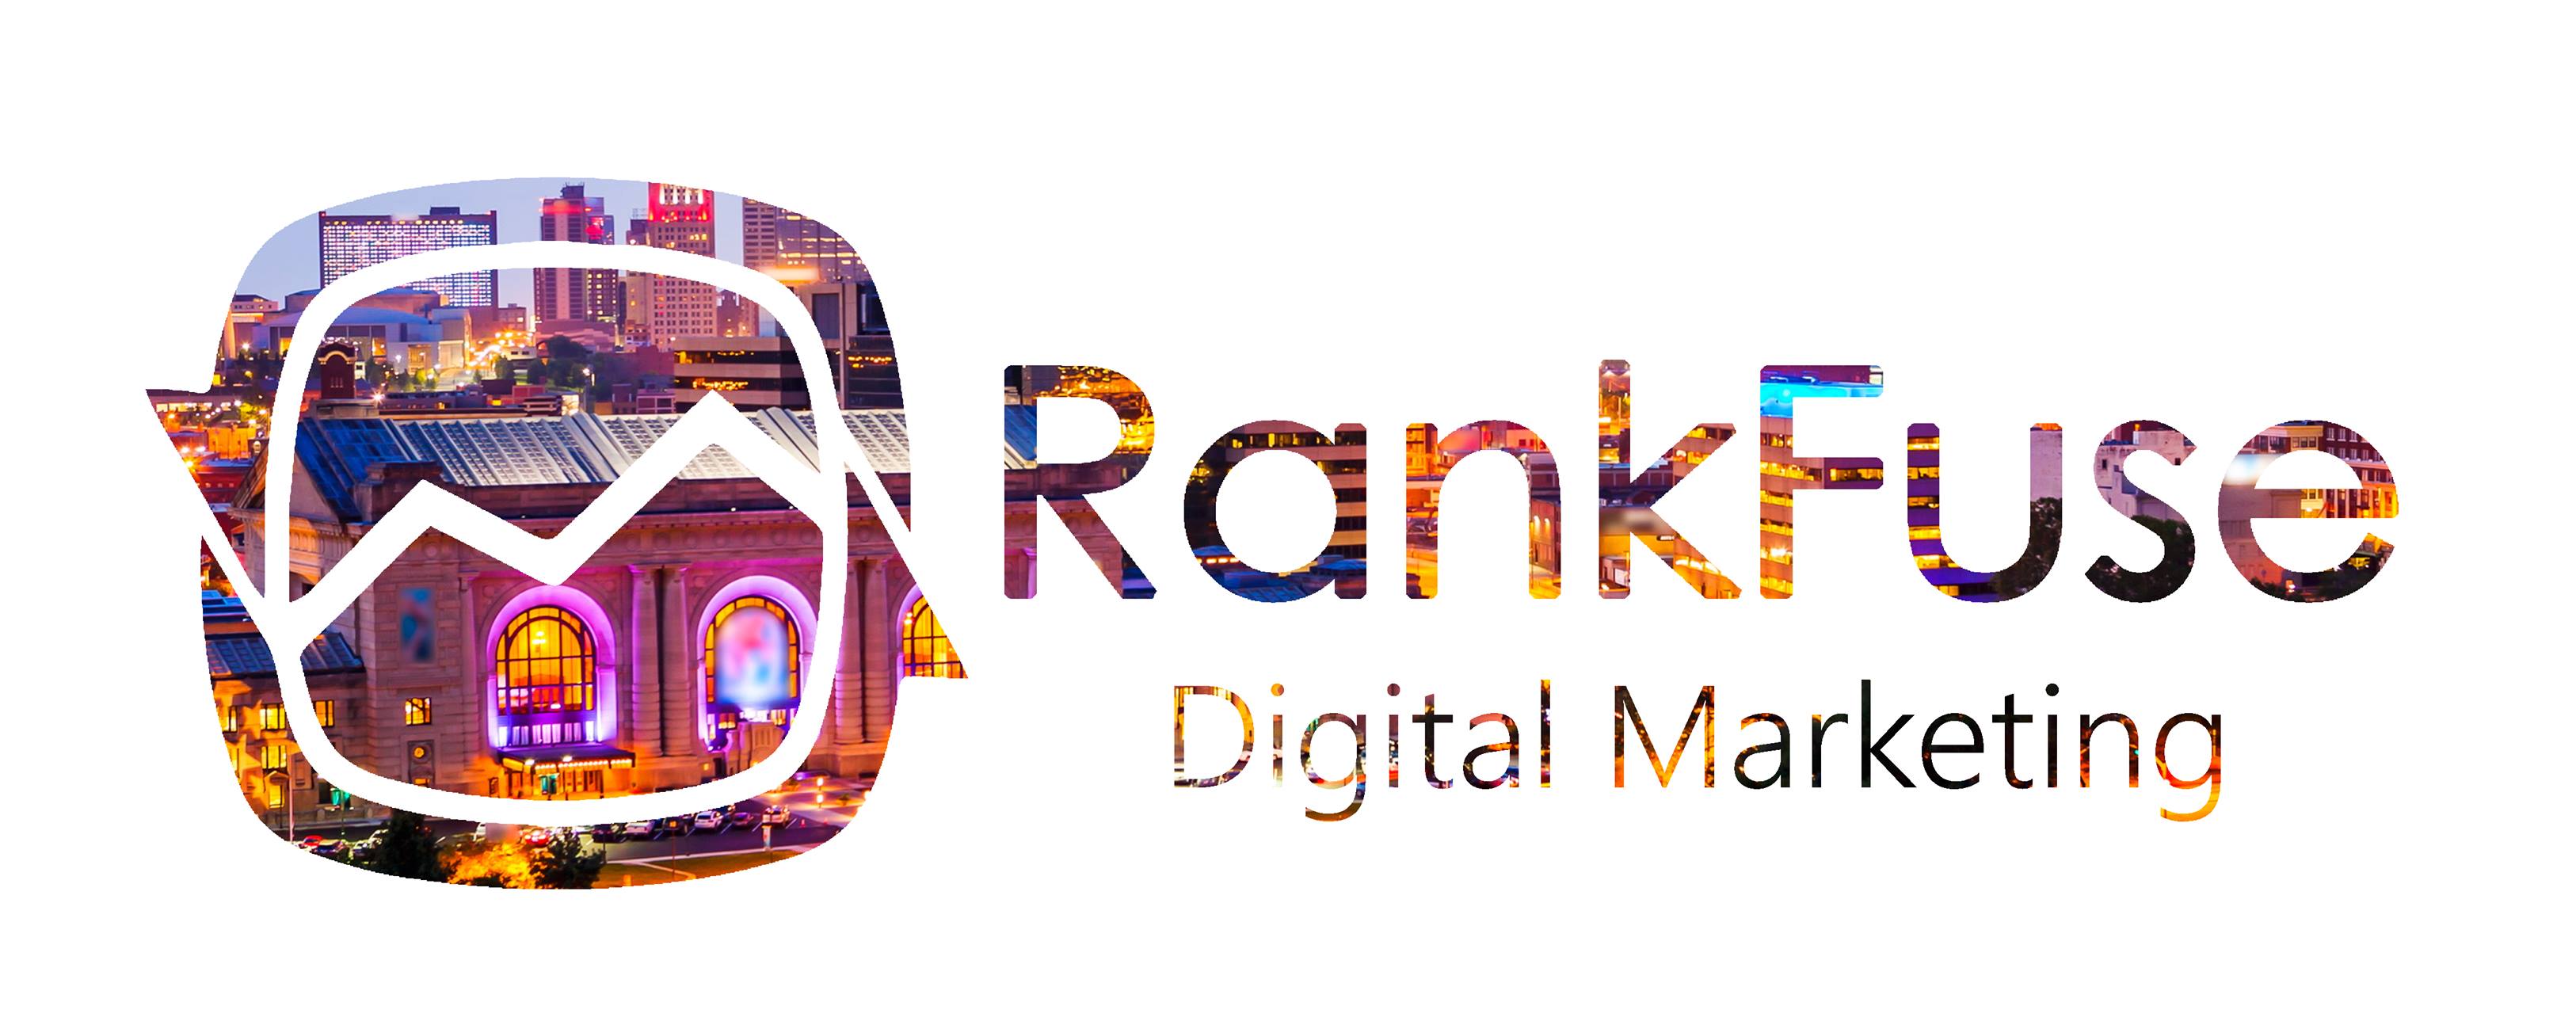 Rank Fuse Digital Marketing